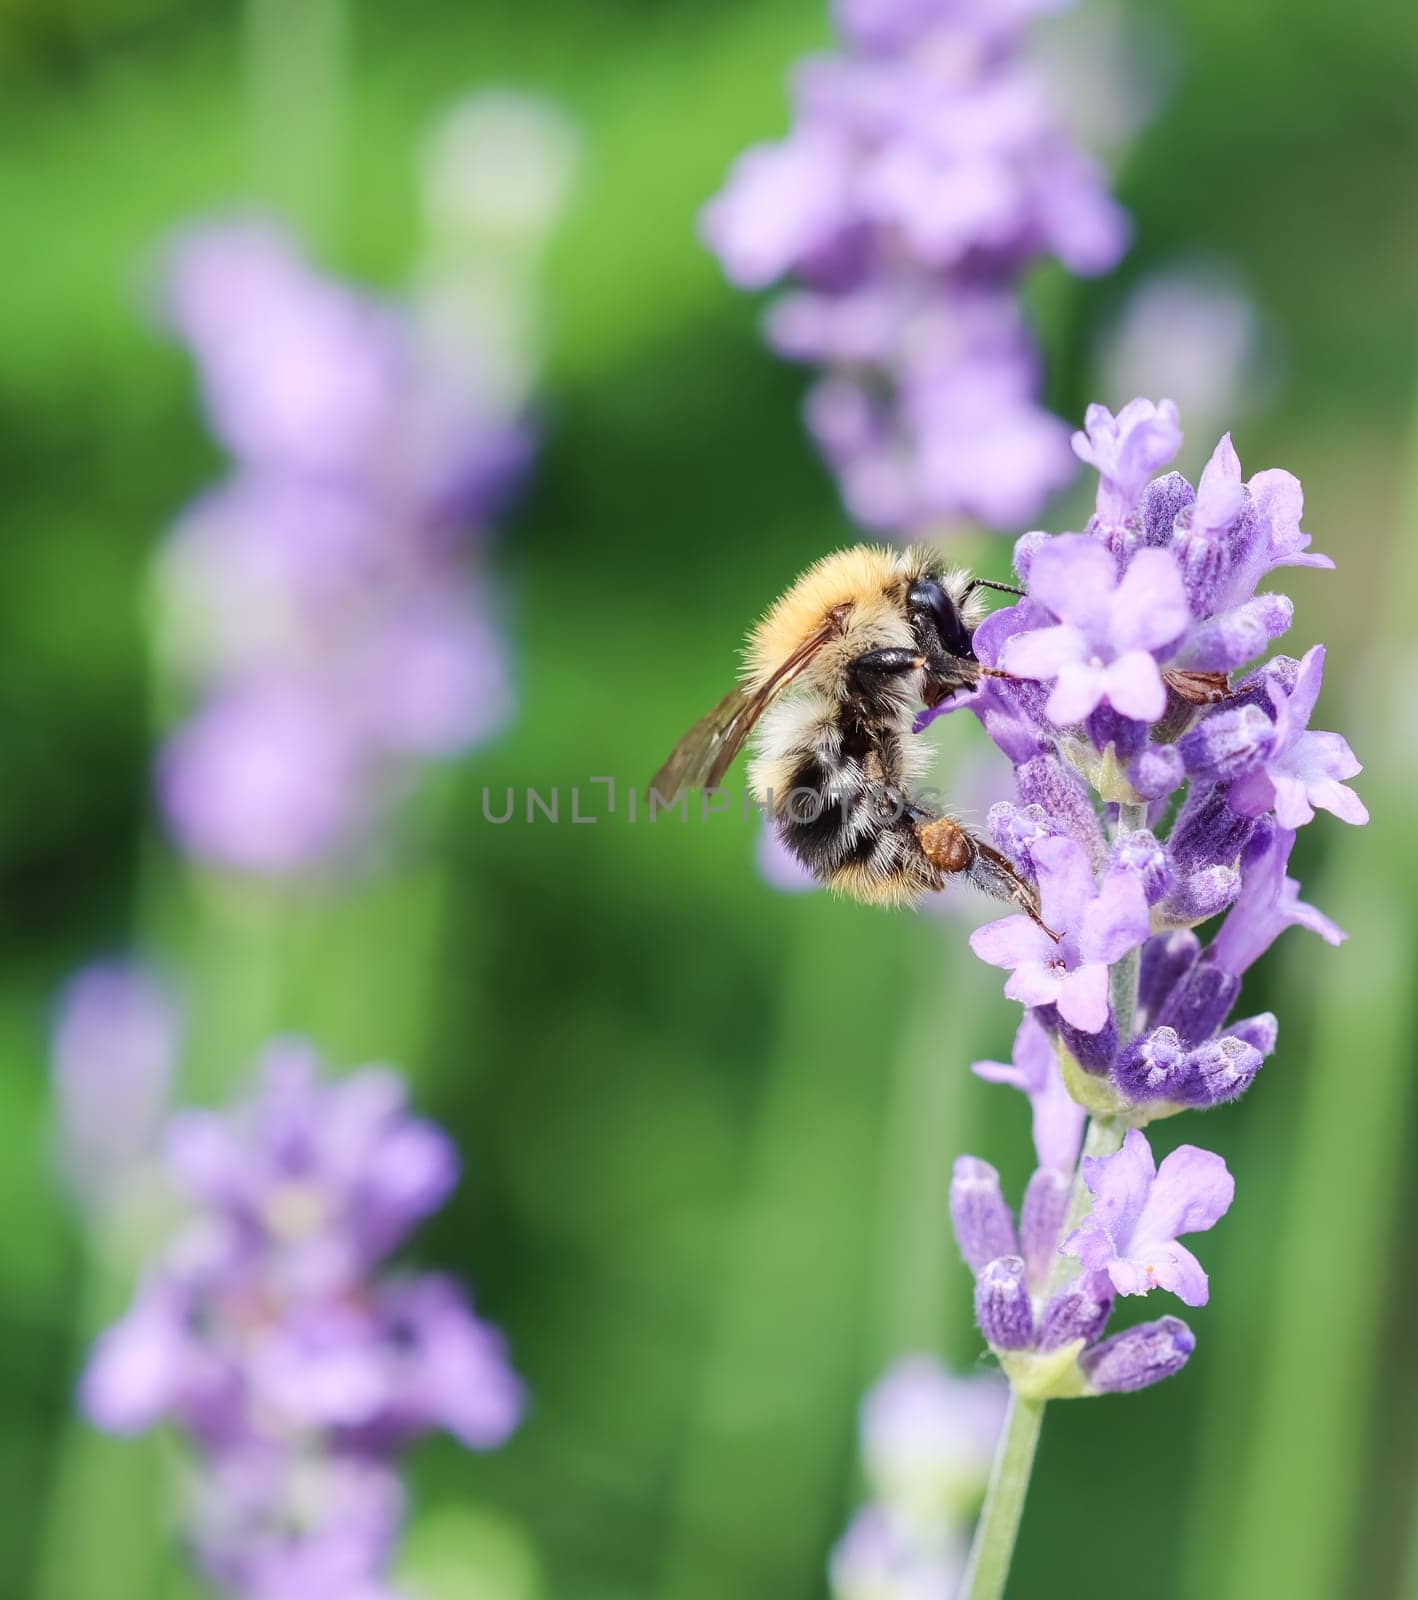 Working bee on lavender flower in summer garden. Gardening and summer vacation concept